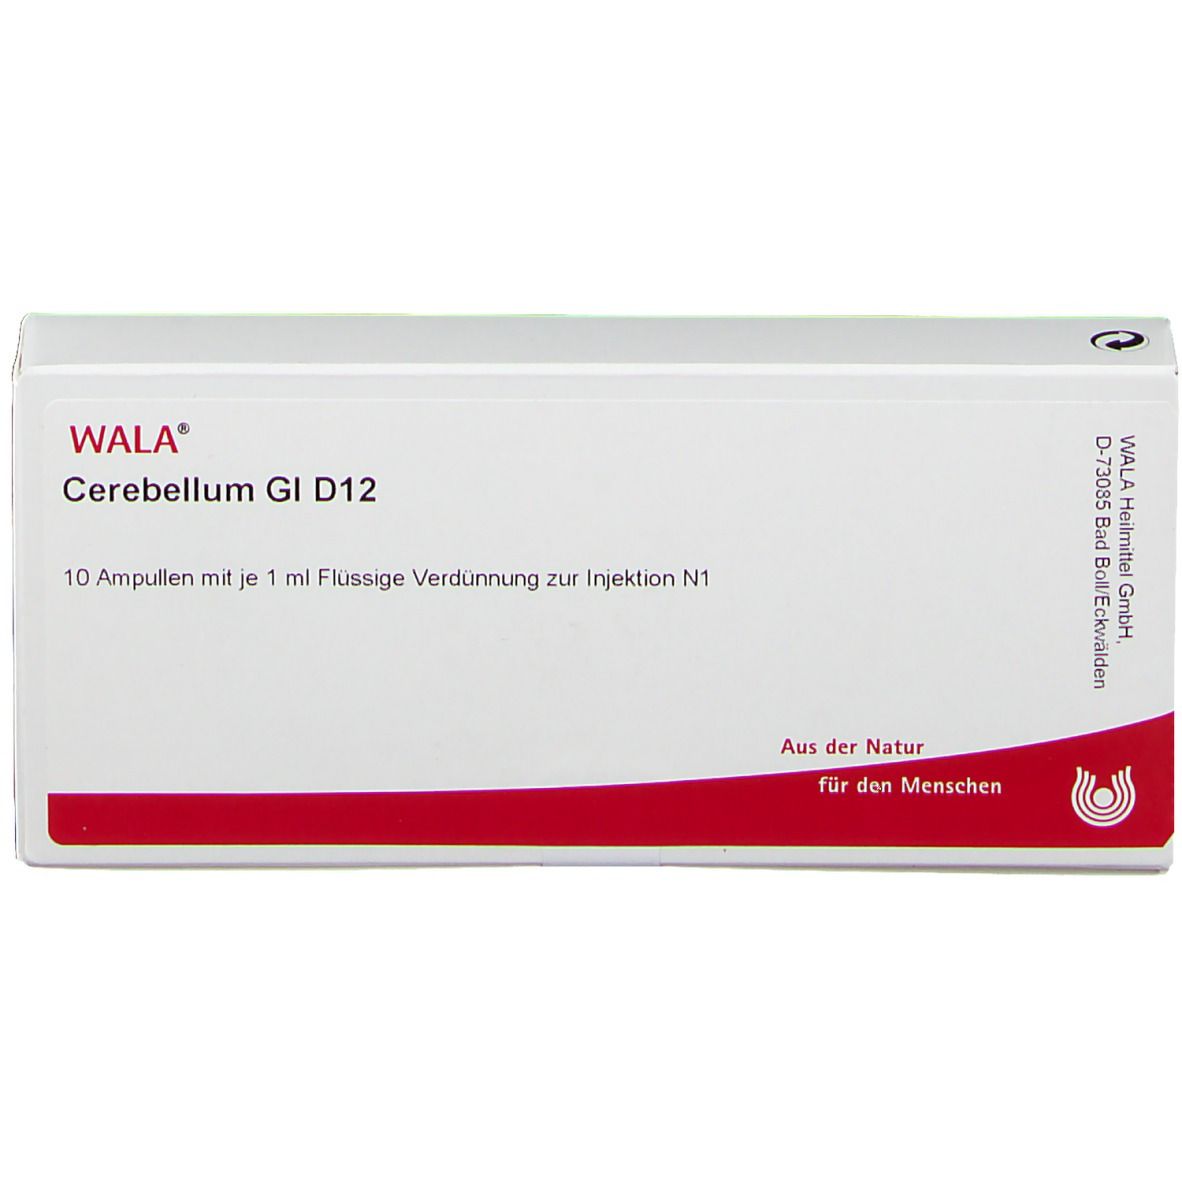 Wala® Cerebellum Gl D 12